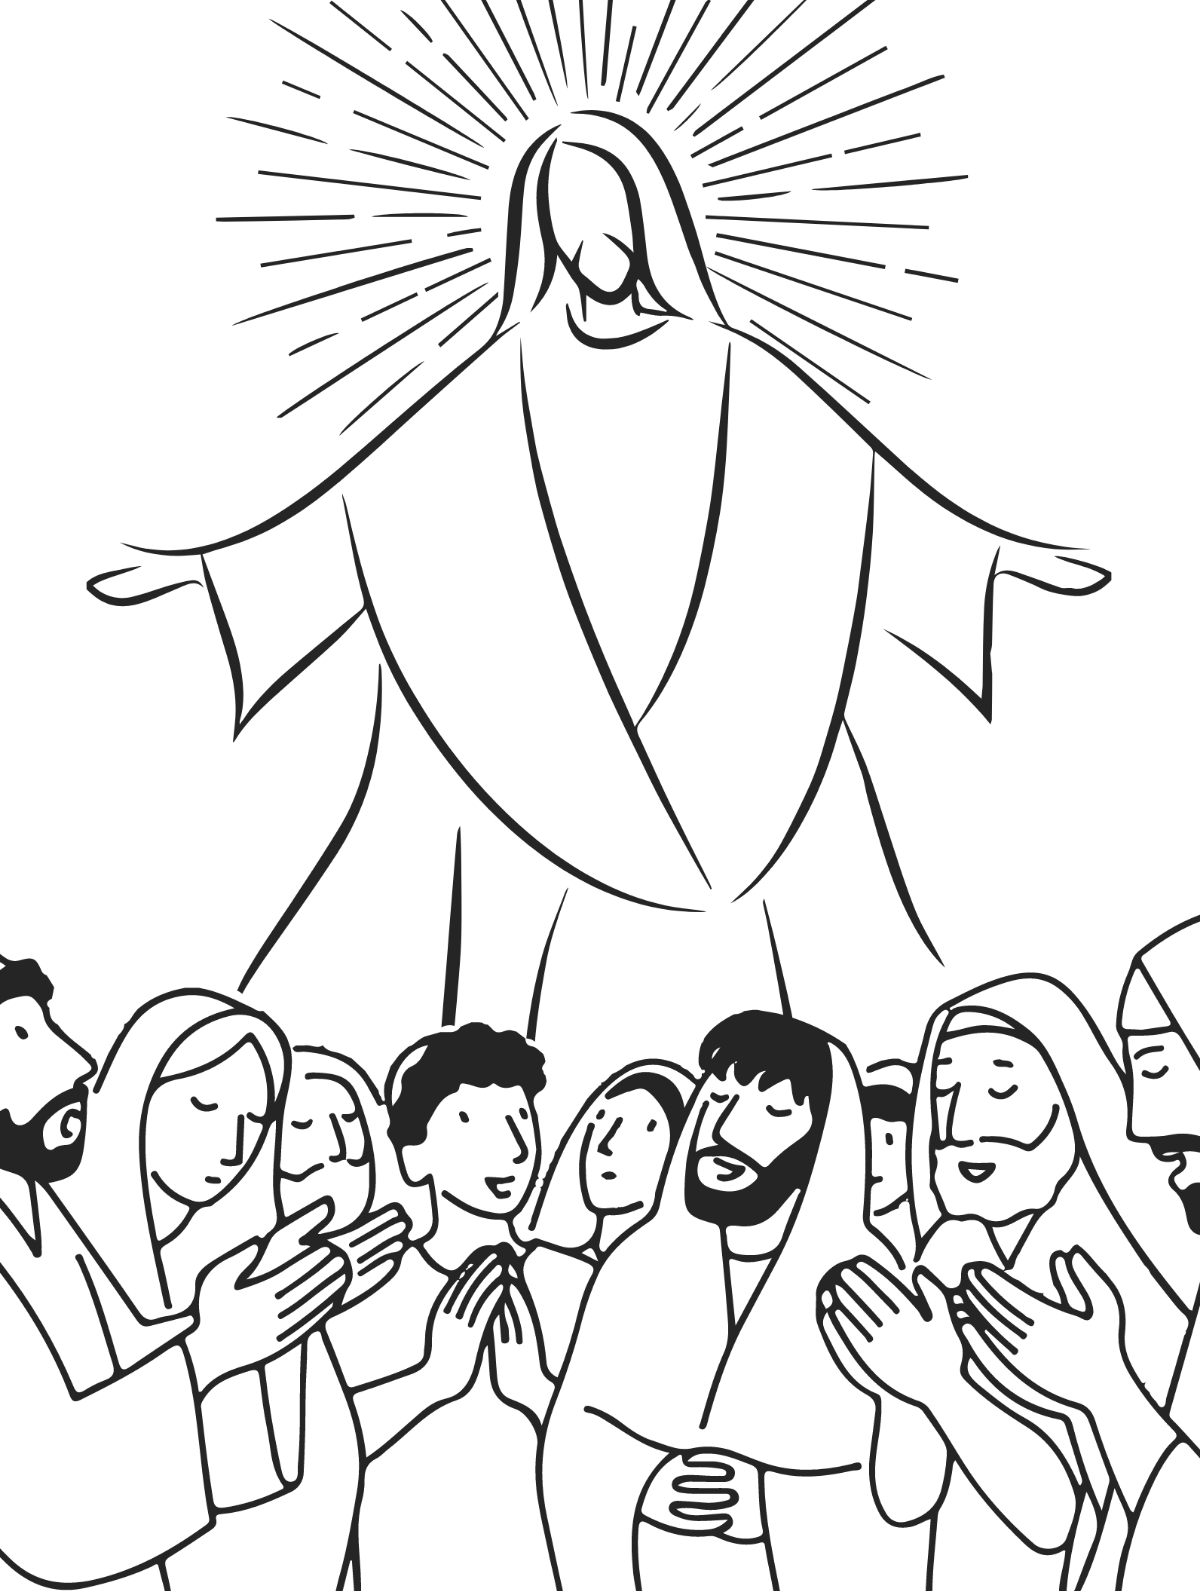 Pentecost Sunday Drawing Template